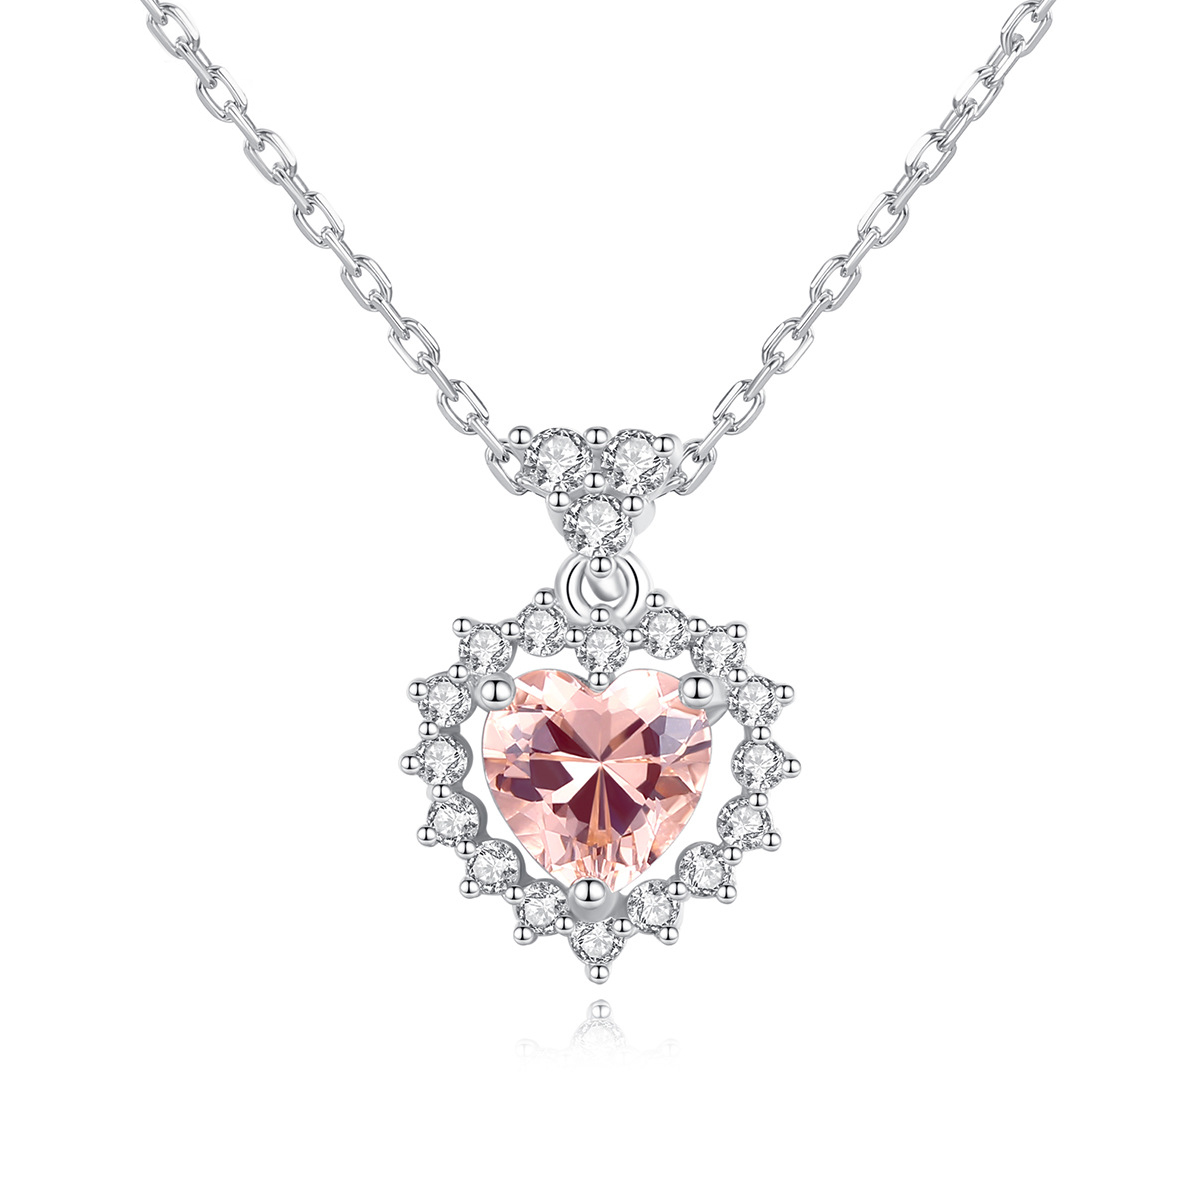 Exquisite Peach Garnet Pendantsterling Silver Necklace